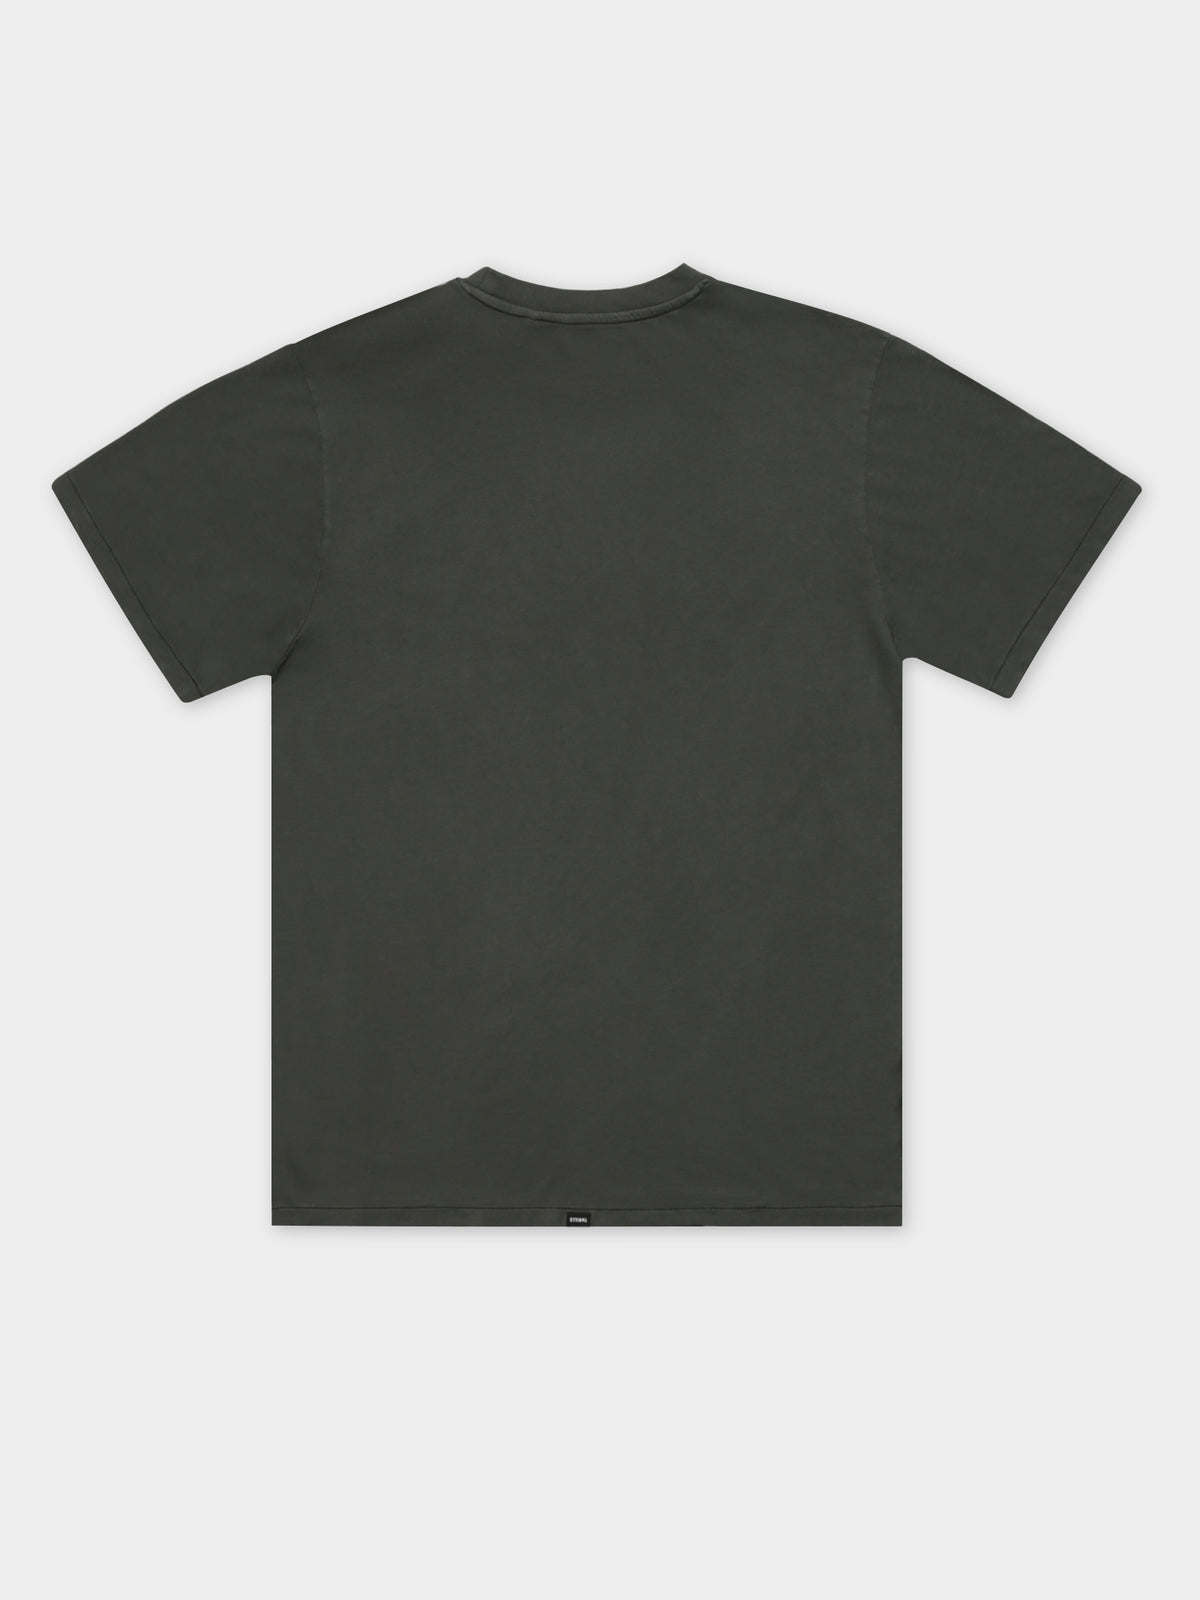 The Palmed Thrills Merch Fit T-Shirt in Merch Black